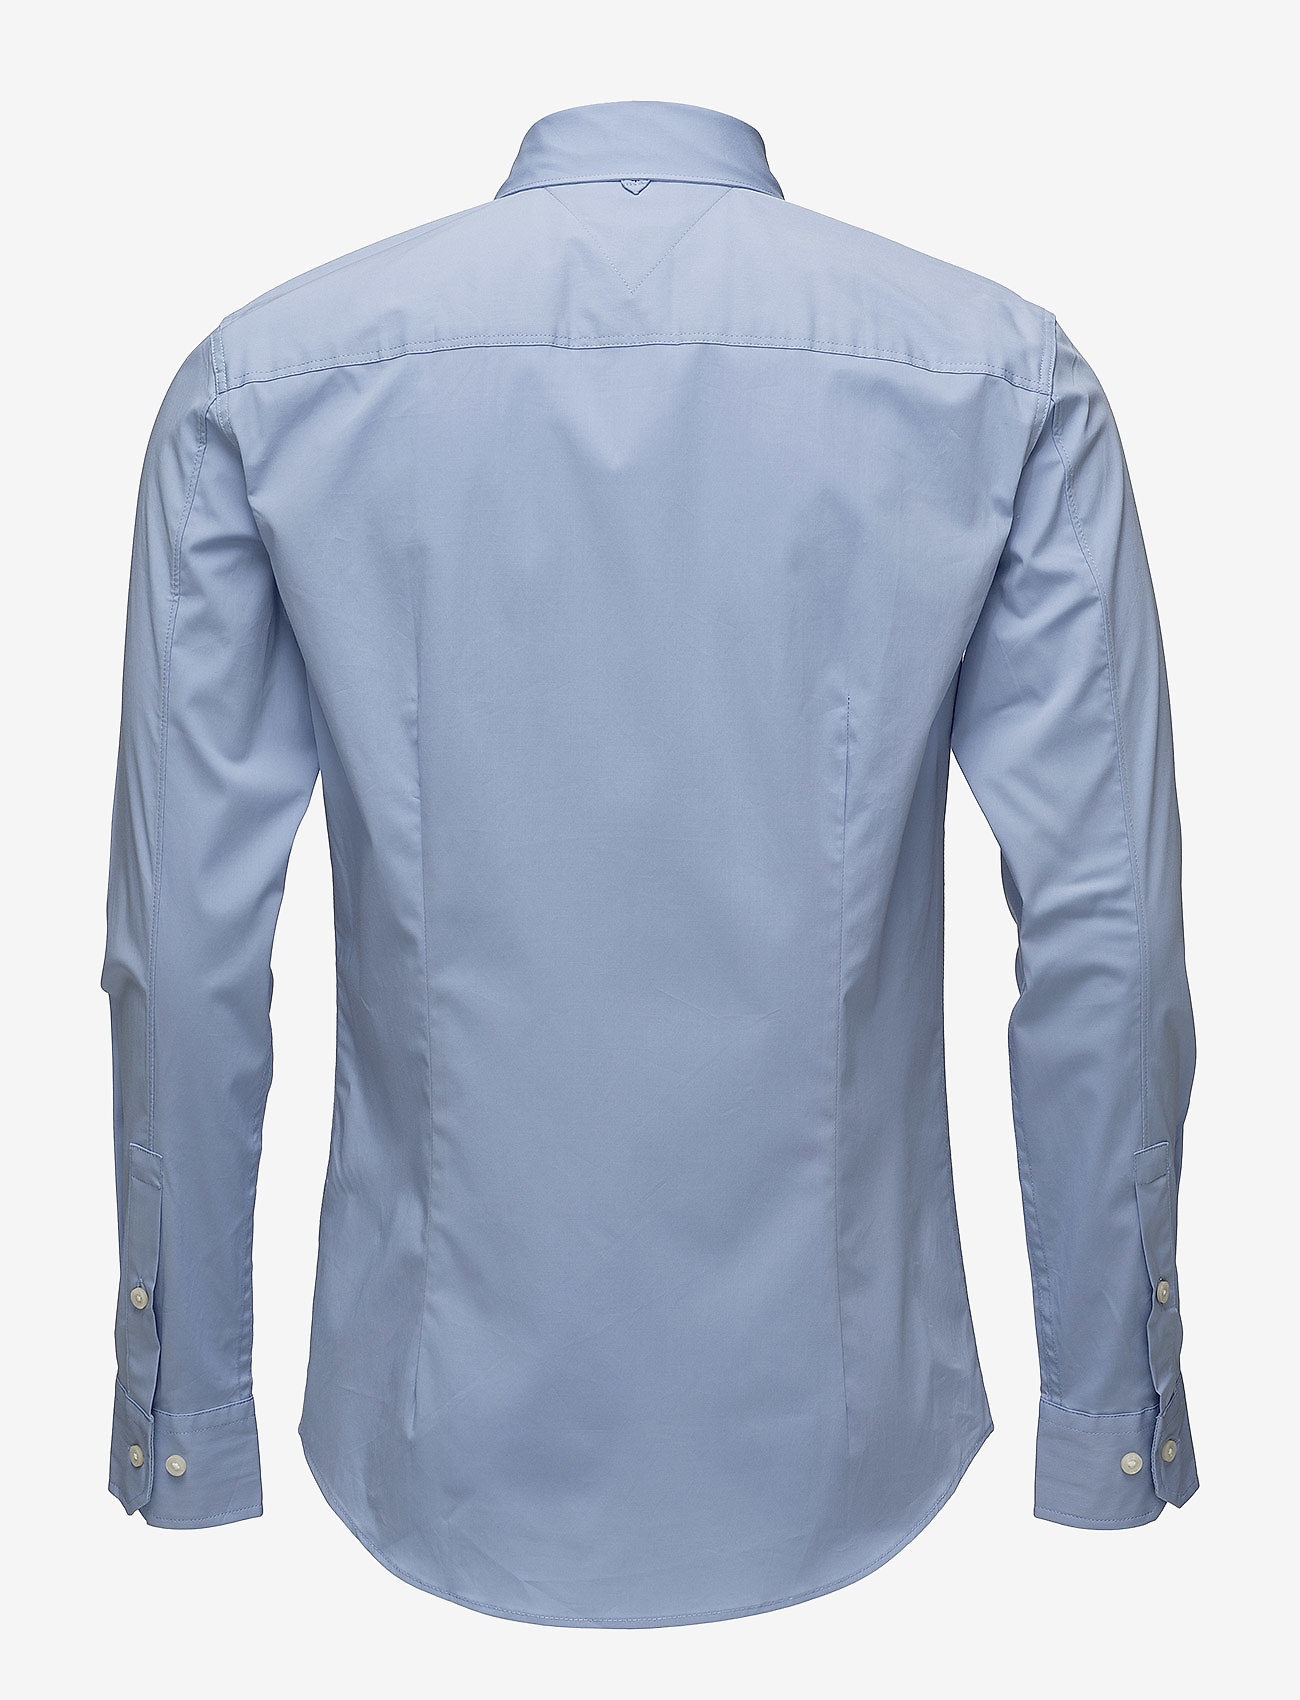 Tommy Jeans - TJM ORIGINAL STRETCH SHIRT - business shirts - lavender lustre - 1